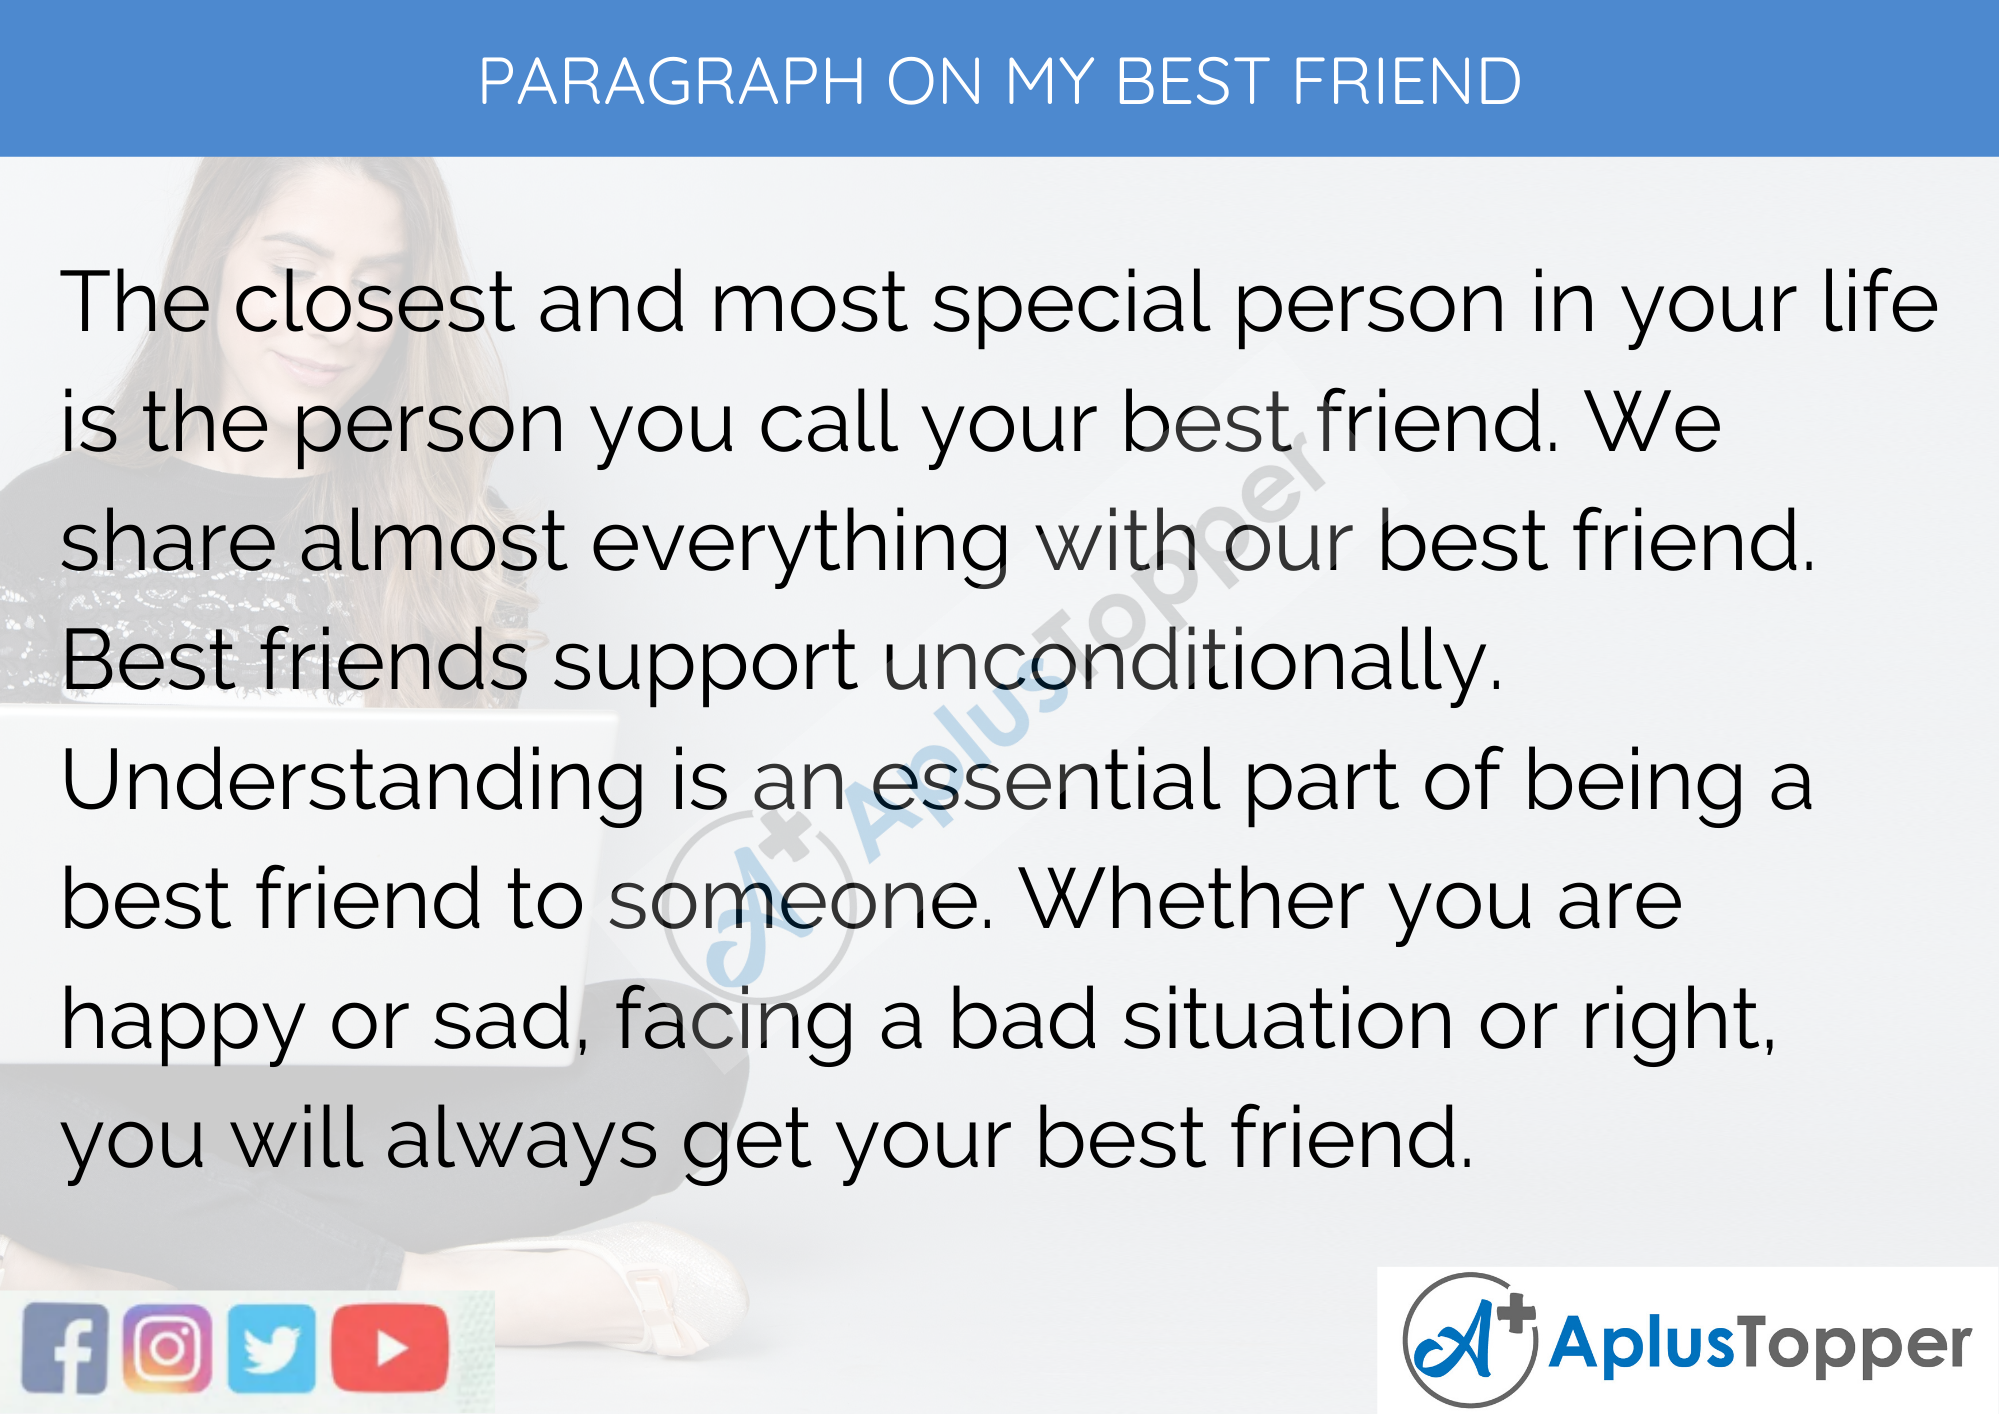 Your best friends